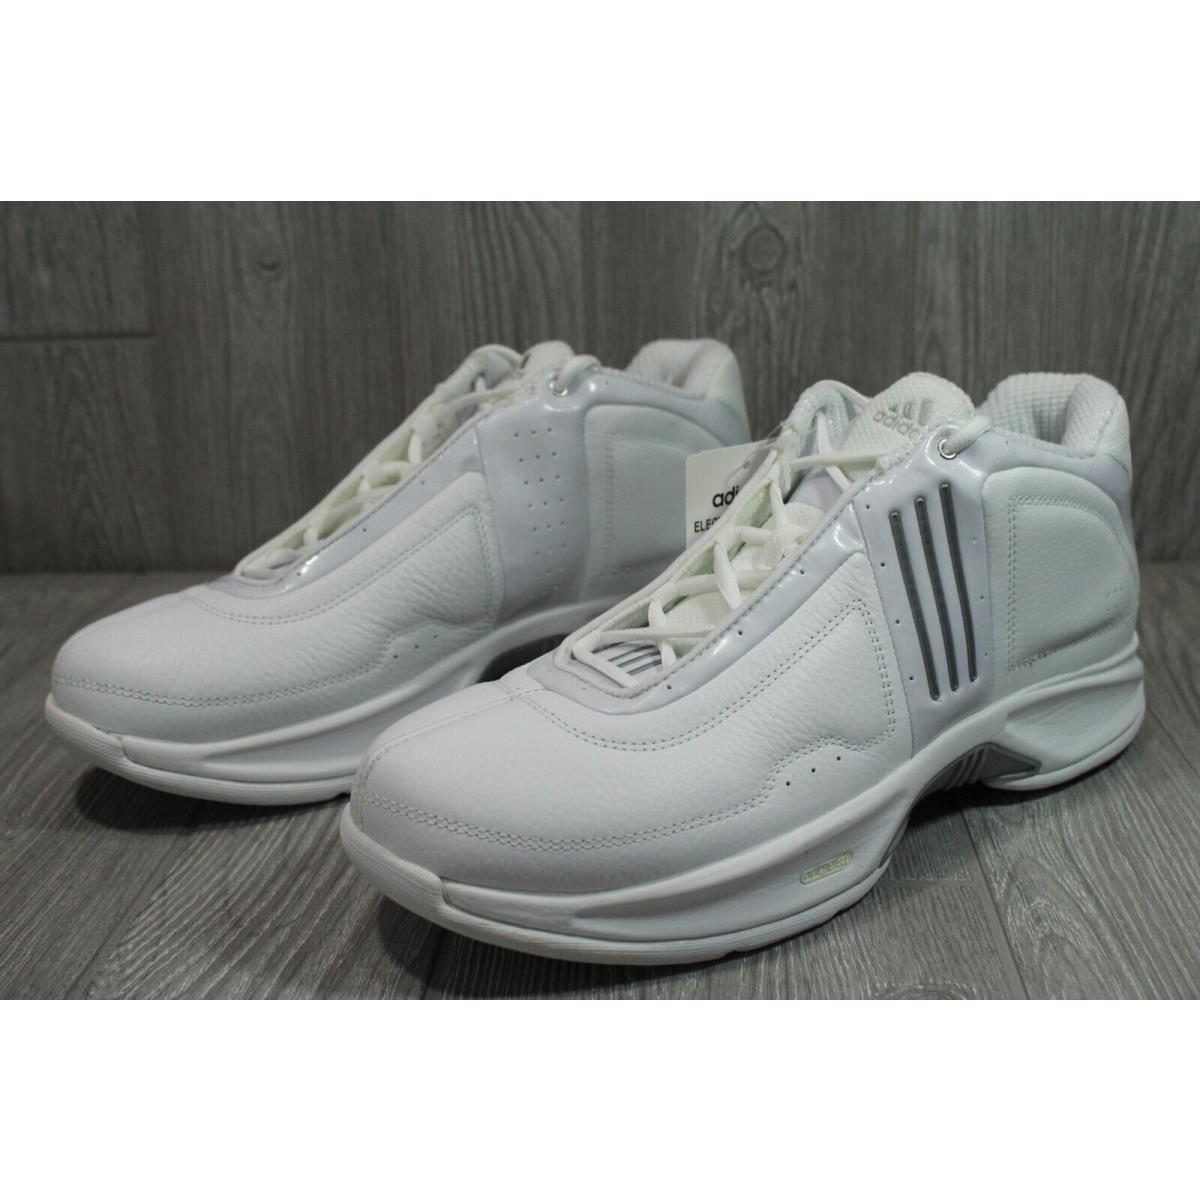 Adidas shoes Vintage - White 0